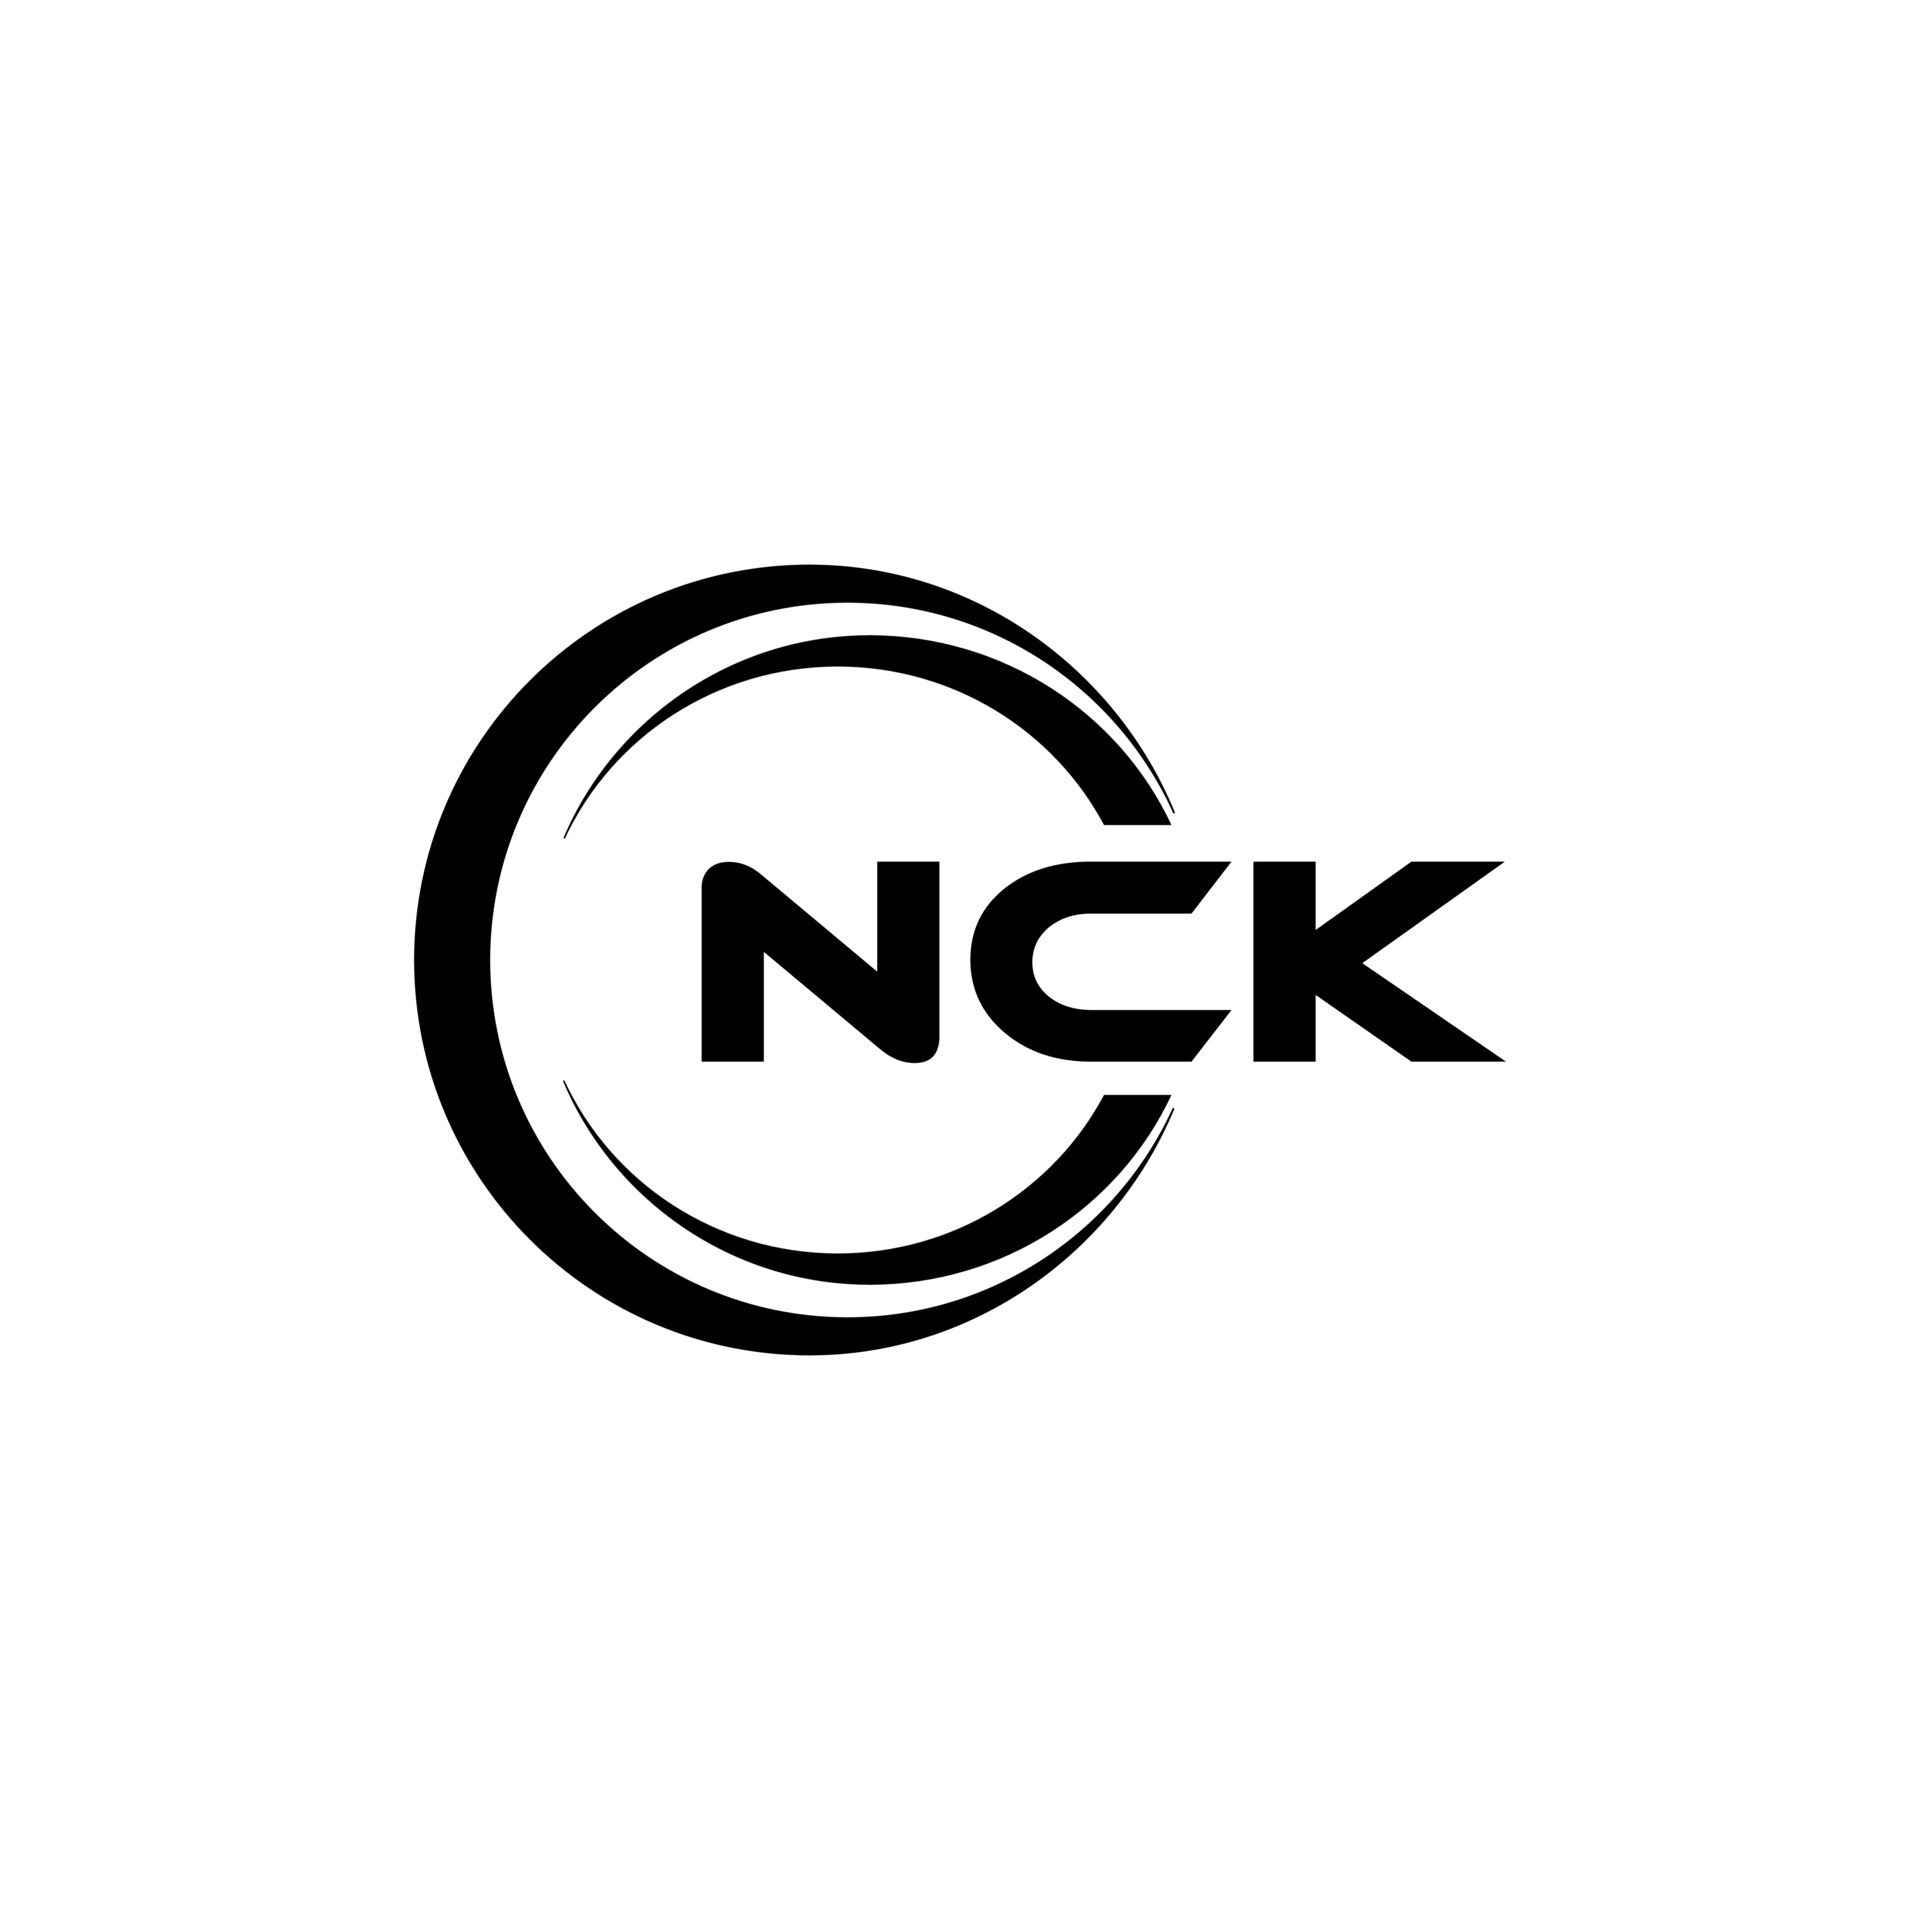 NCK Logo Design, Inspiration for a Unique Identity. Modern Elegance and ...